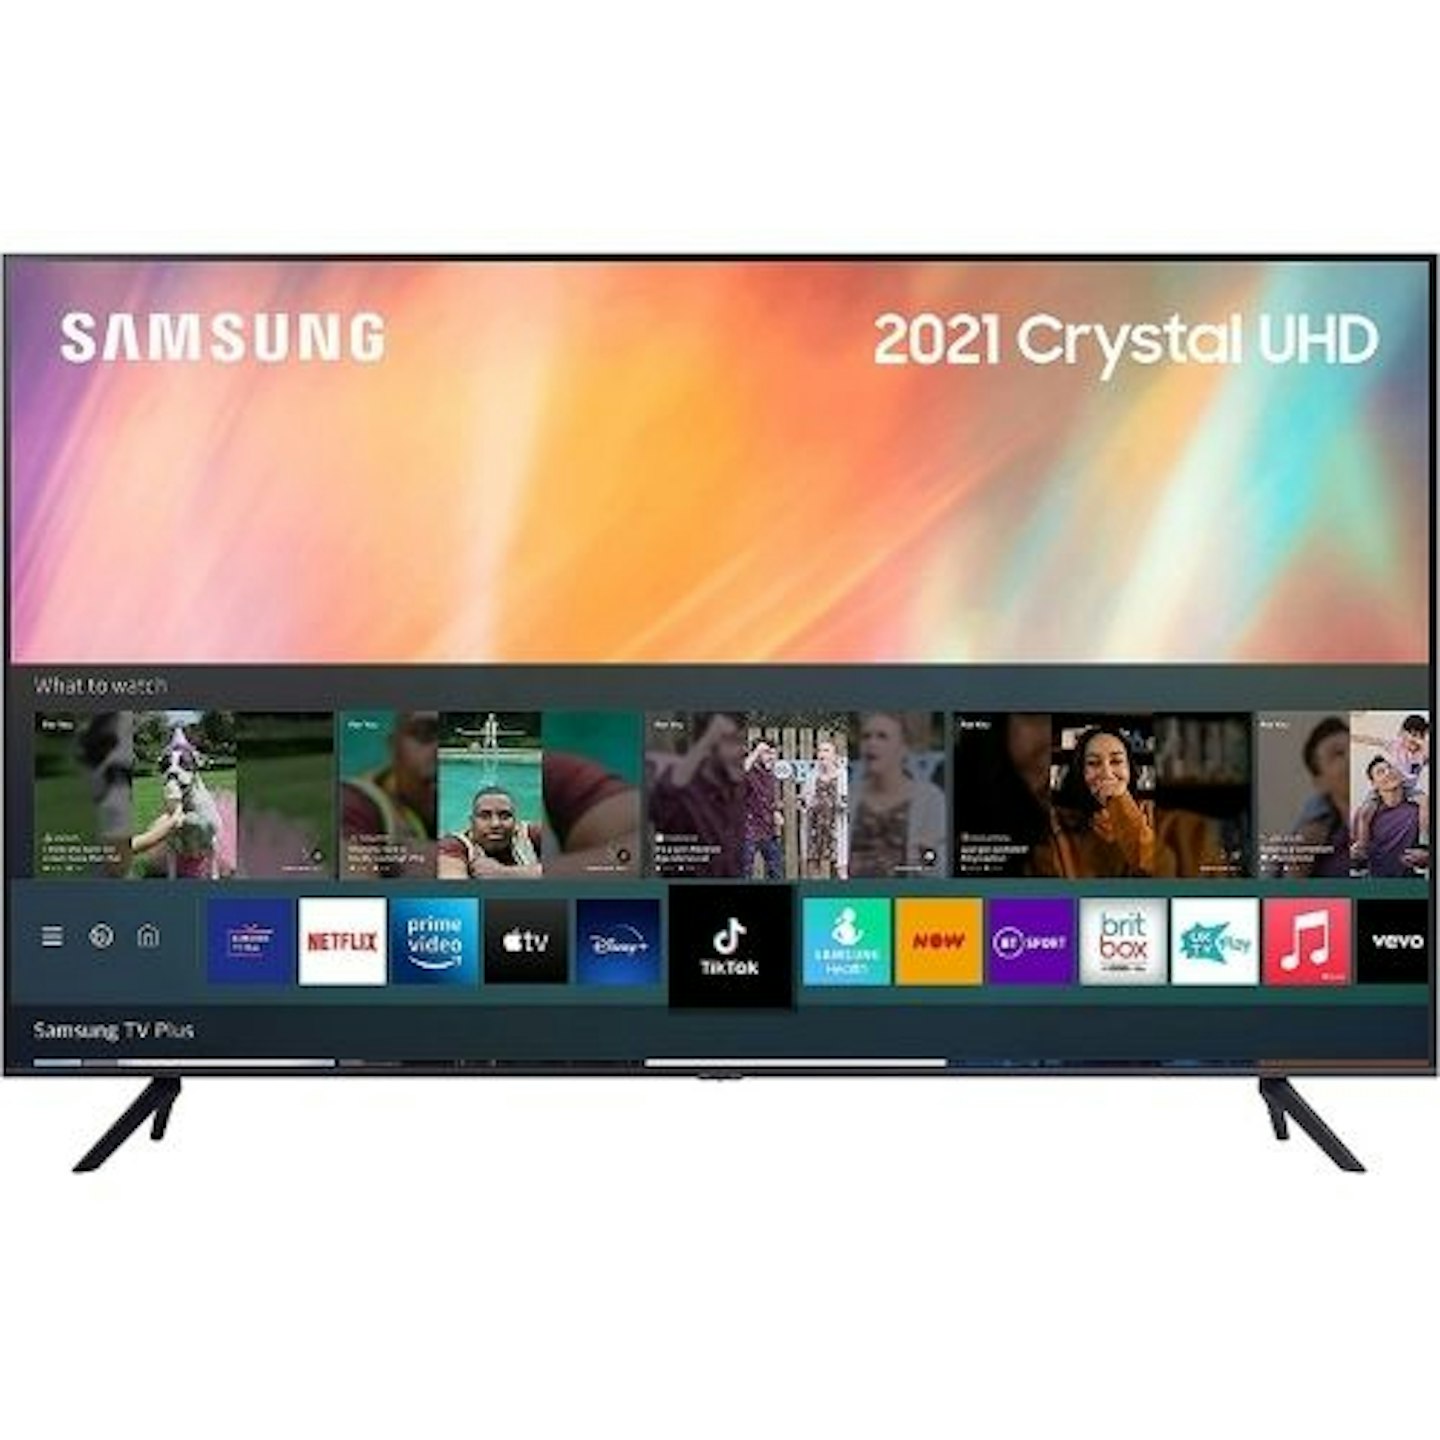 Samsung 2021 43 inch AU7110 Crystal UHD 4K HDR Smart TV